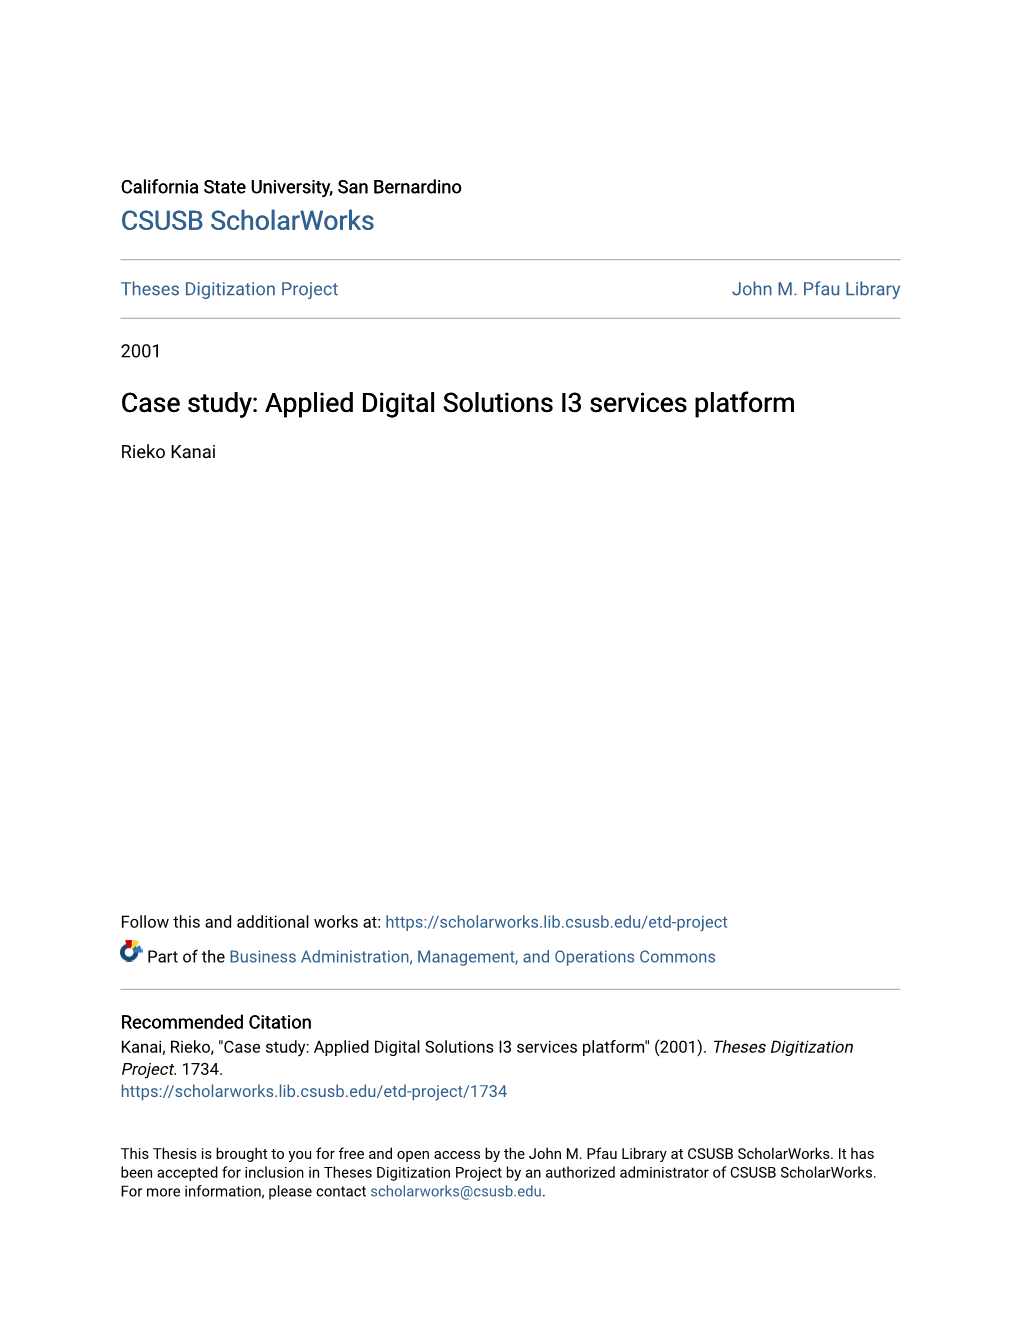 Case Study: Applied Digital Solutions I3 Services Platform